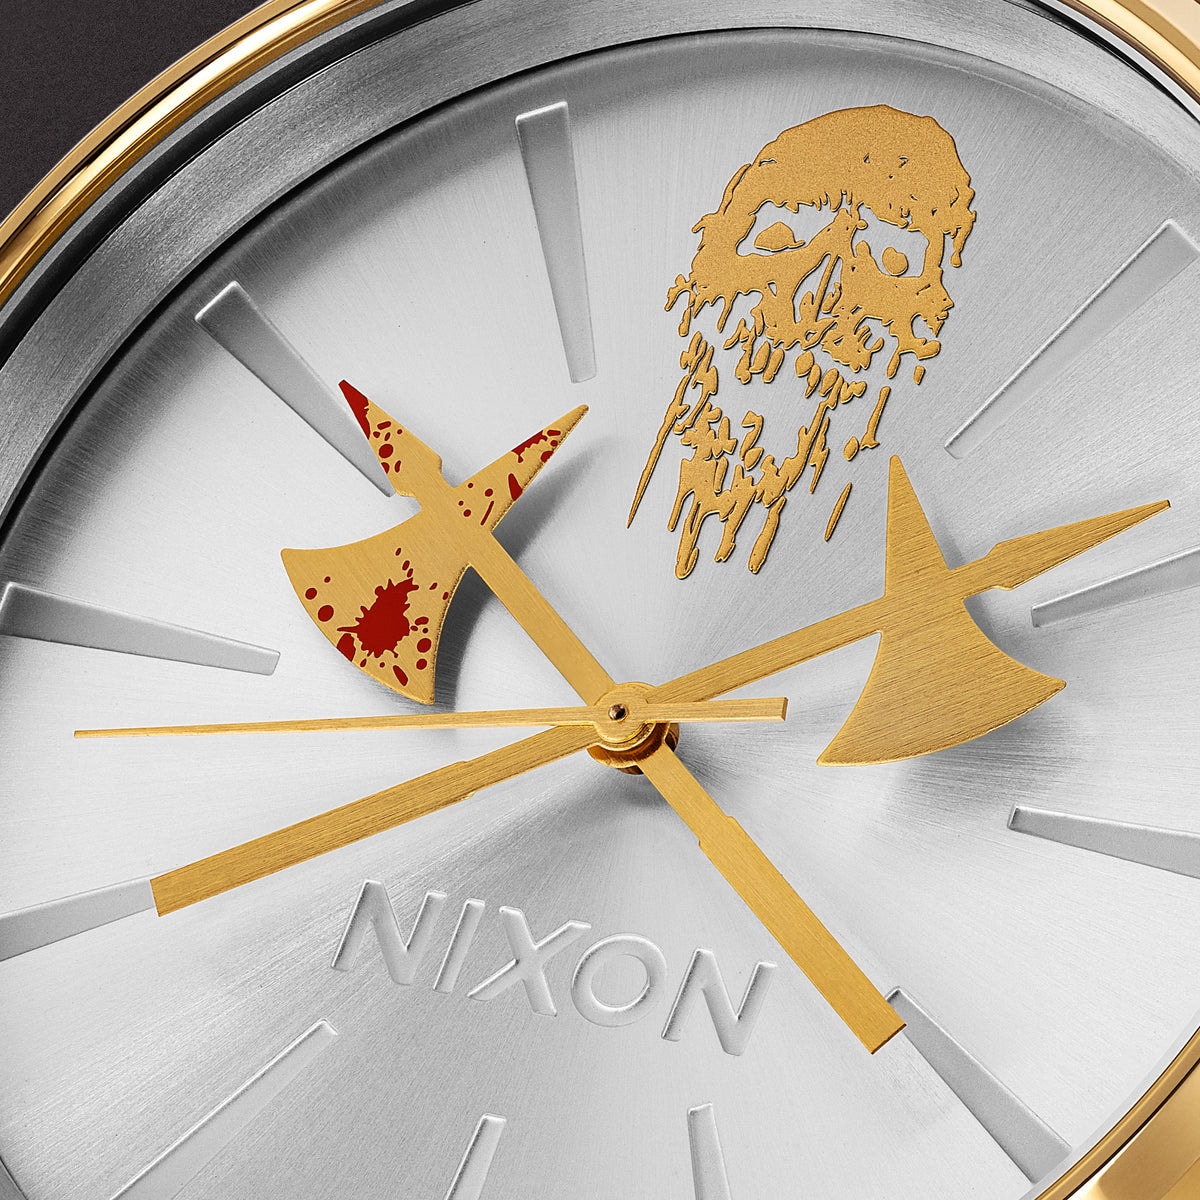 Liquid Death x Nixon Collaboration 'Death Clock' Watch Available Now